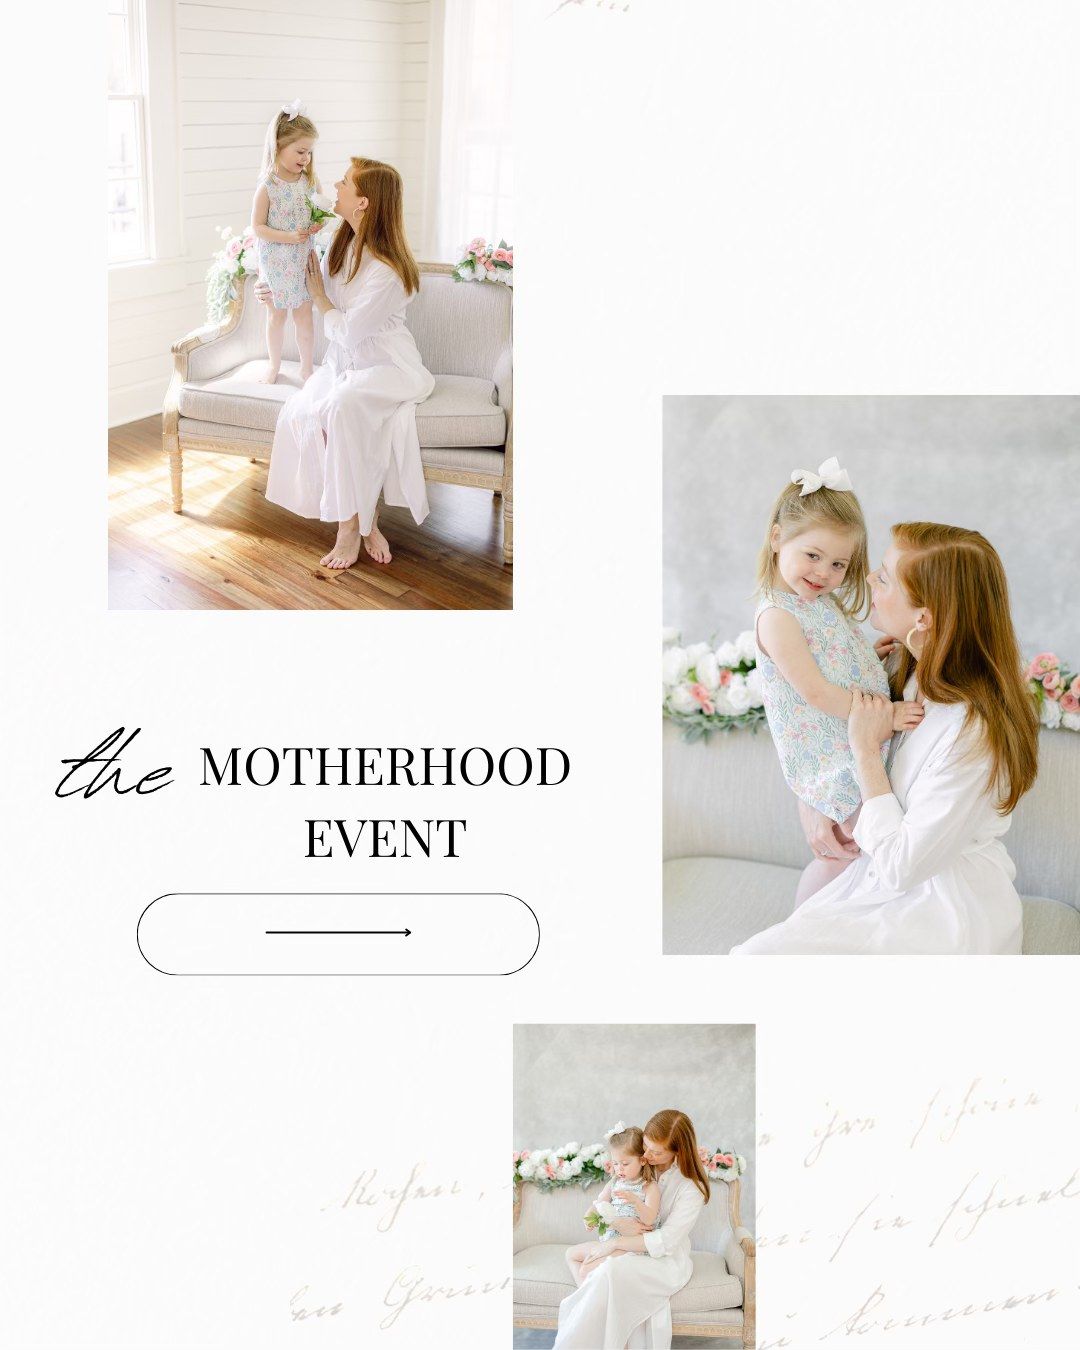 The Motherhood Event